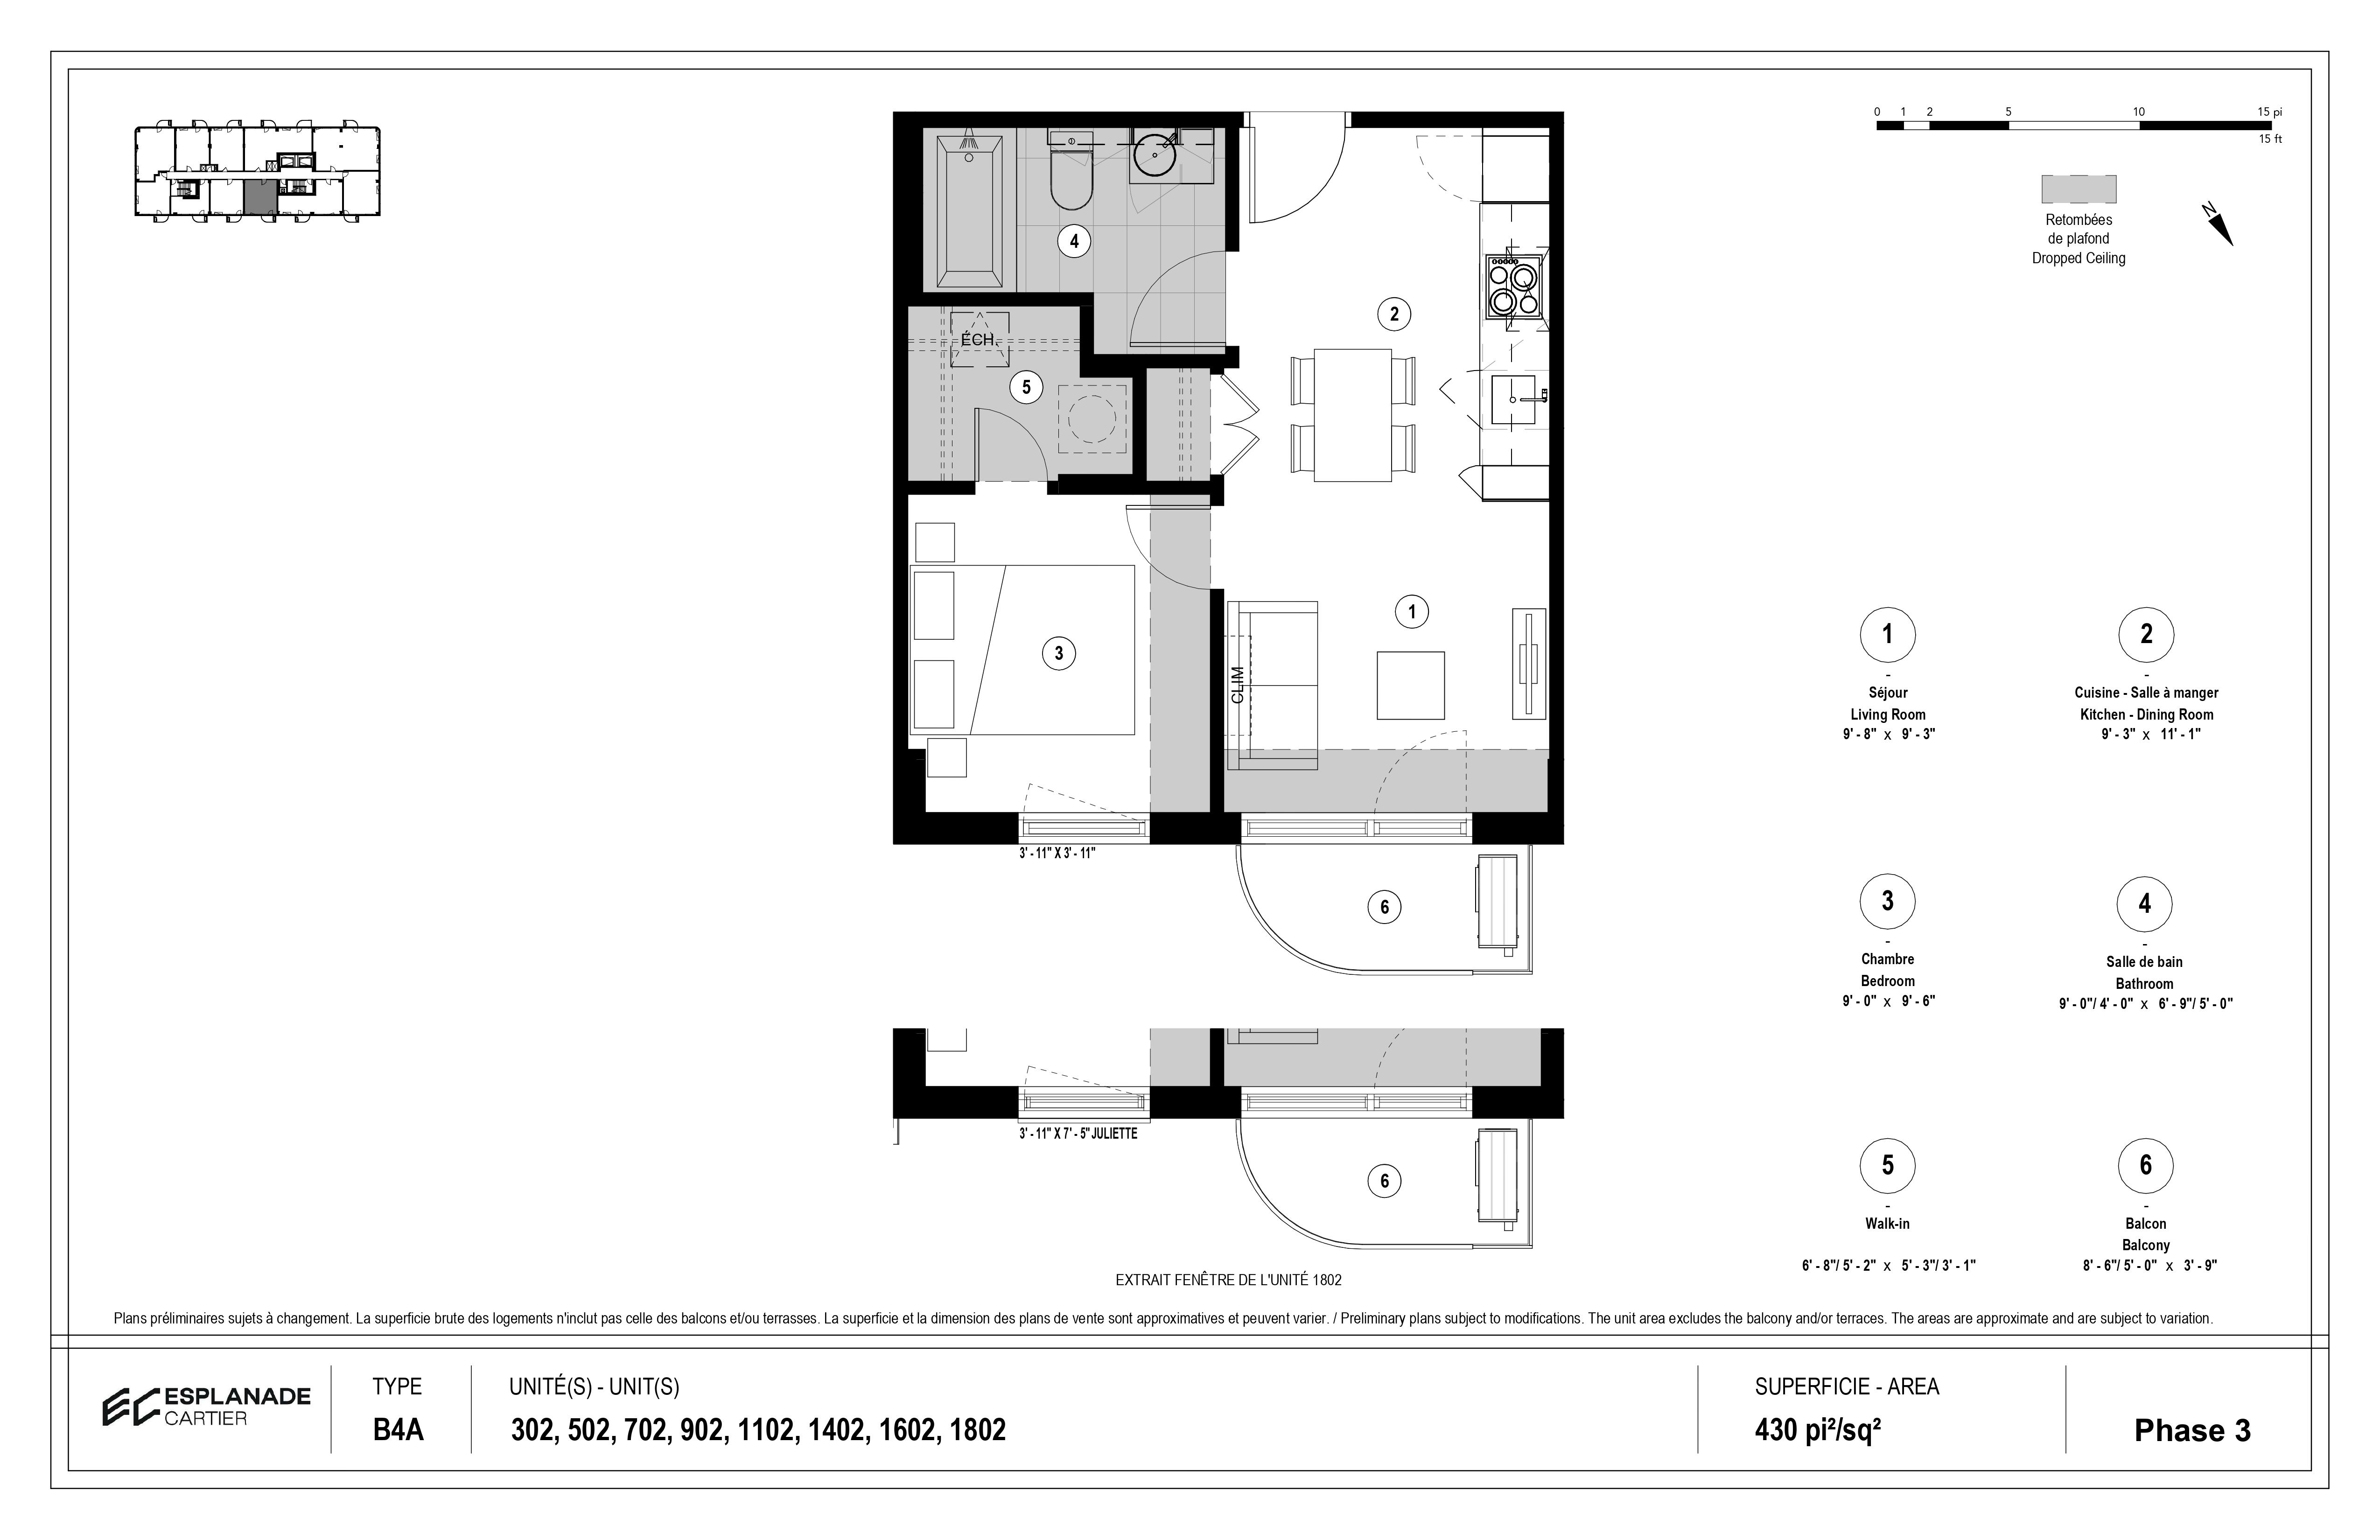  Floor Plan of Esplanade Cartier - Phase 3 Condos with undefined beds